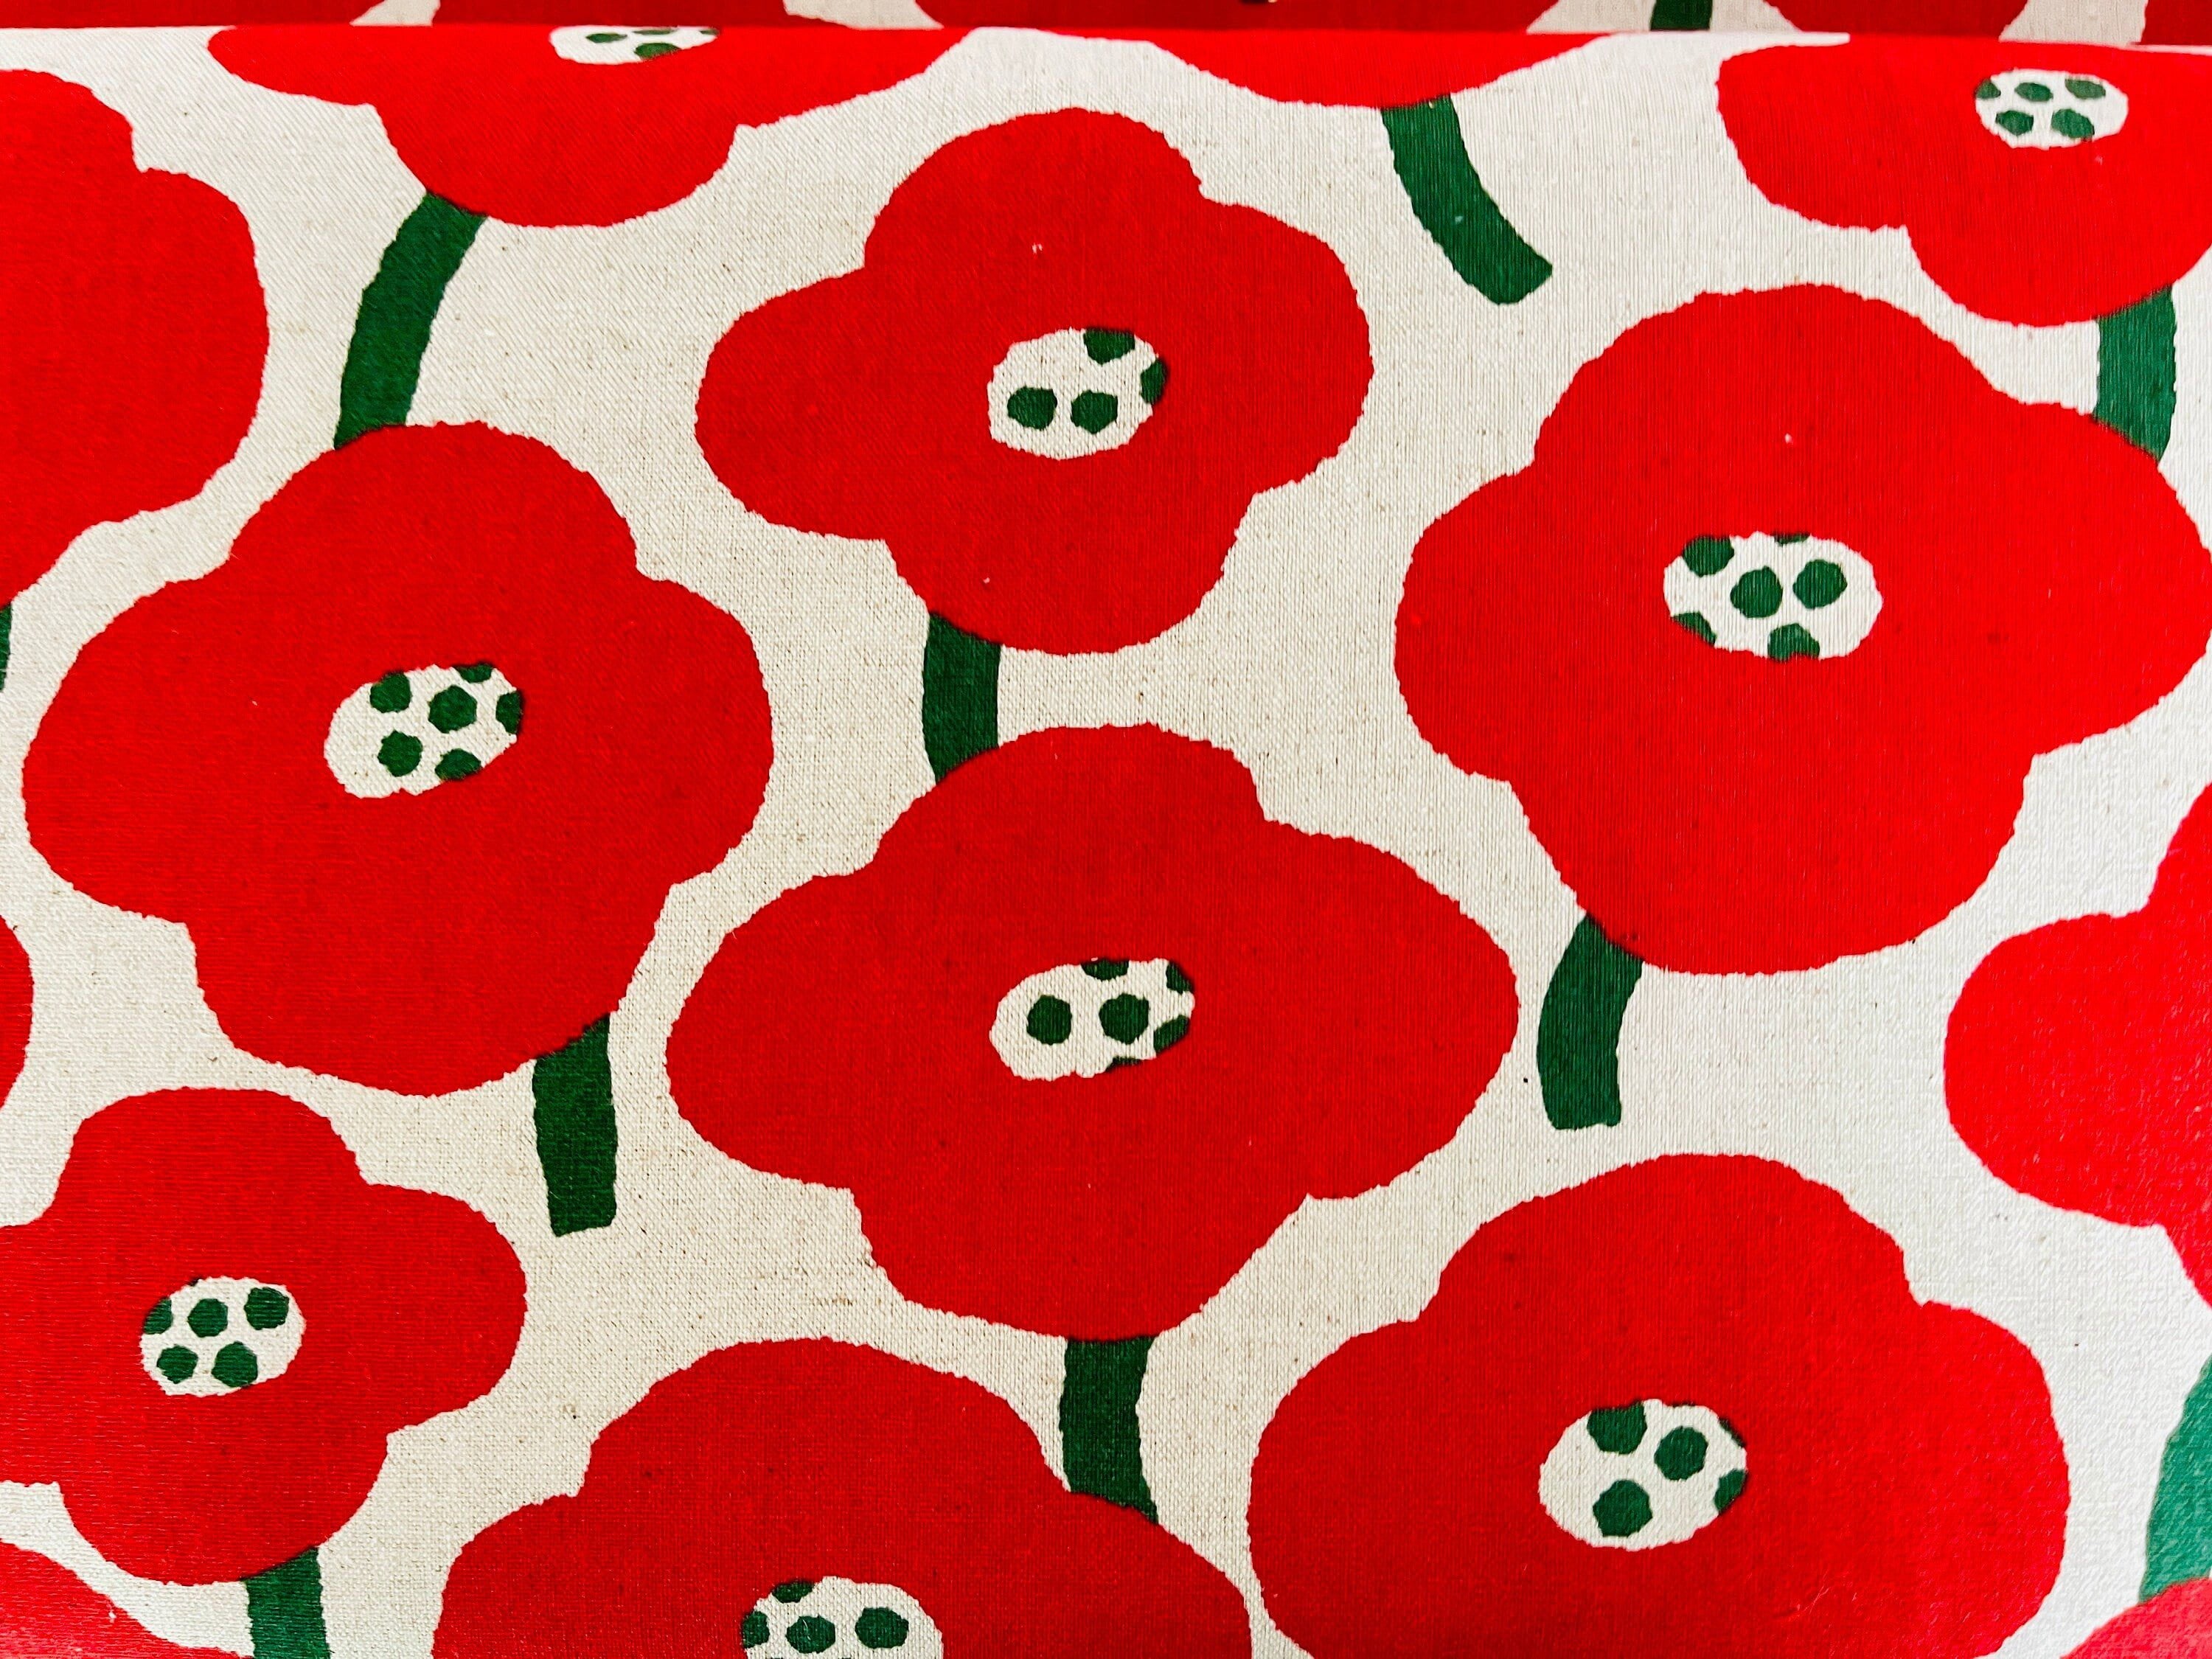 Poppy-Poppy Canvas Fabric-Robert Kaufman-SB-850430D1